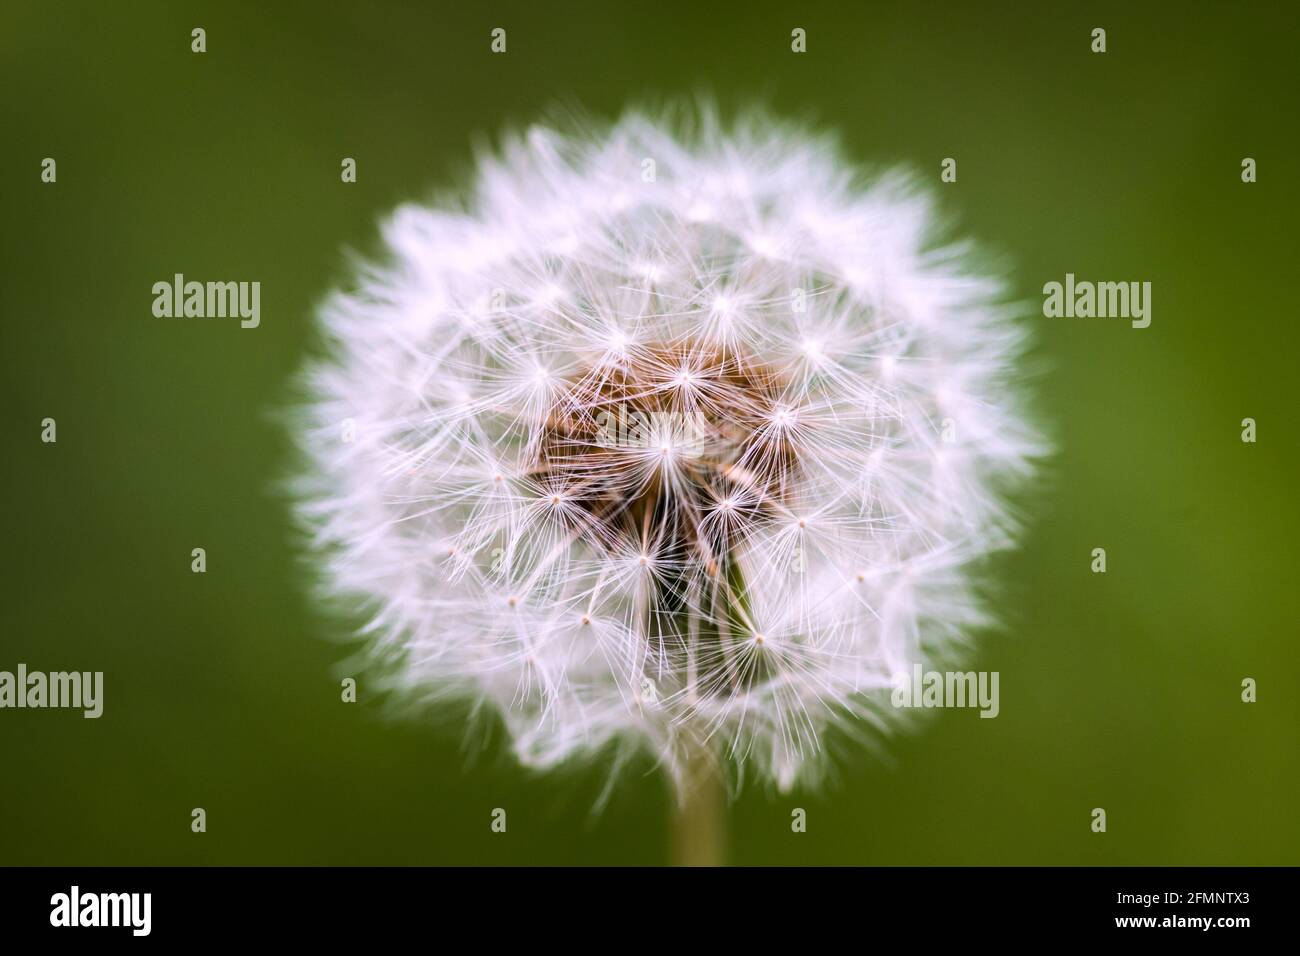 Dandelion Taraxacum officinale seed-head or clock in close up Stock Photo